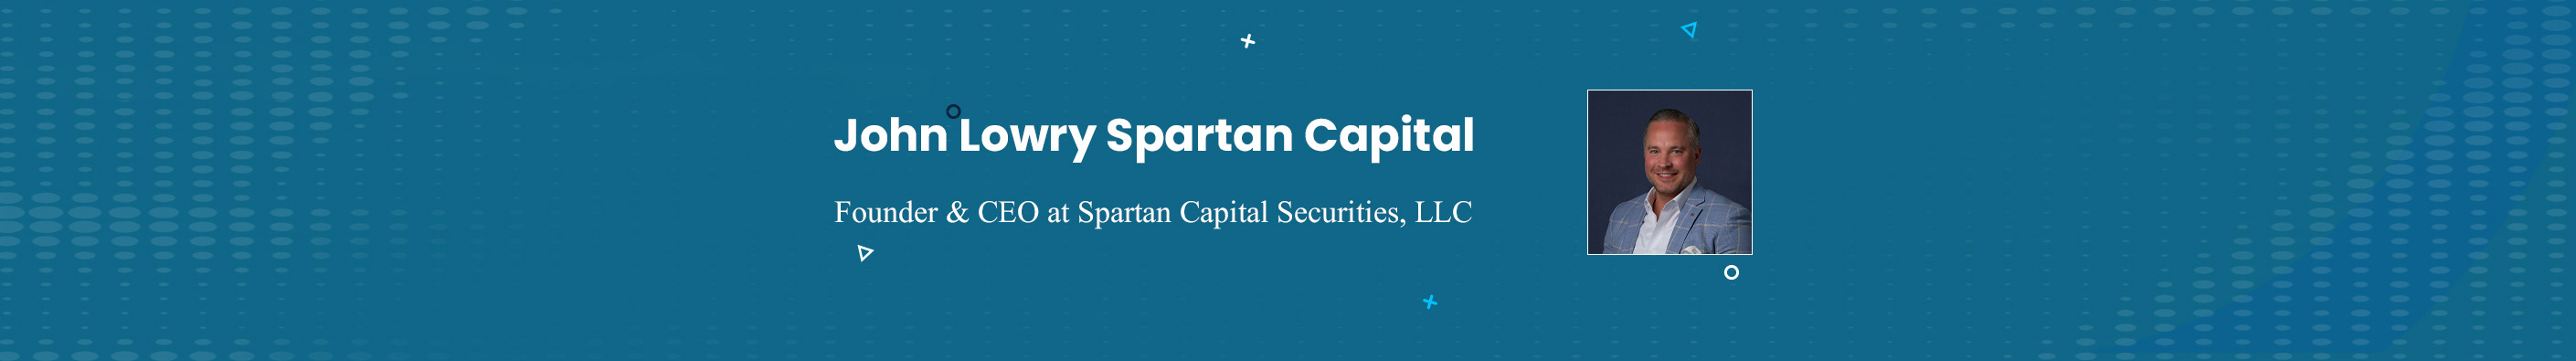 John Lowry Spartan Capital's profile banner